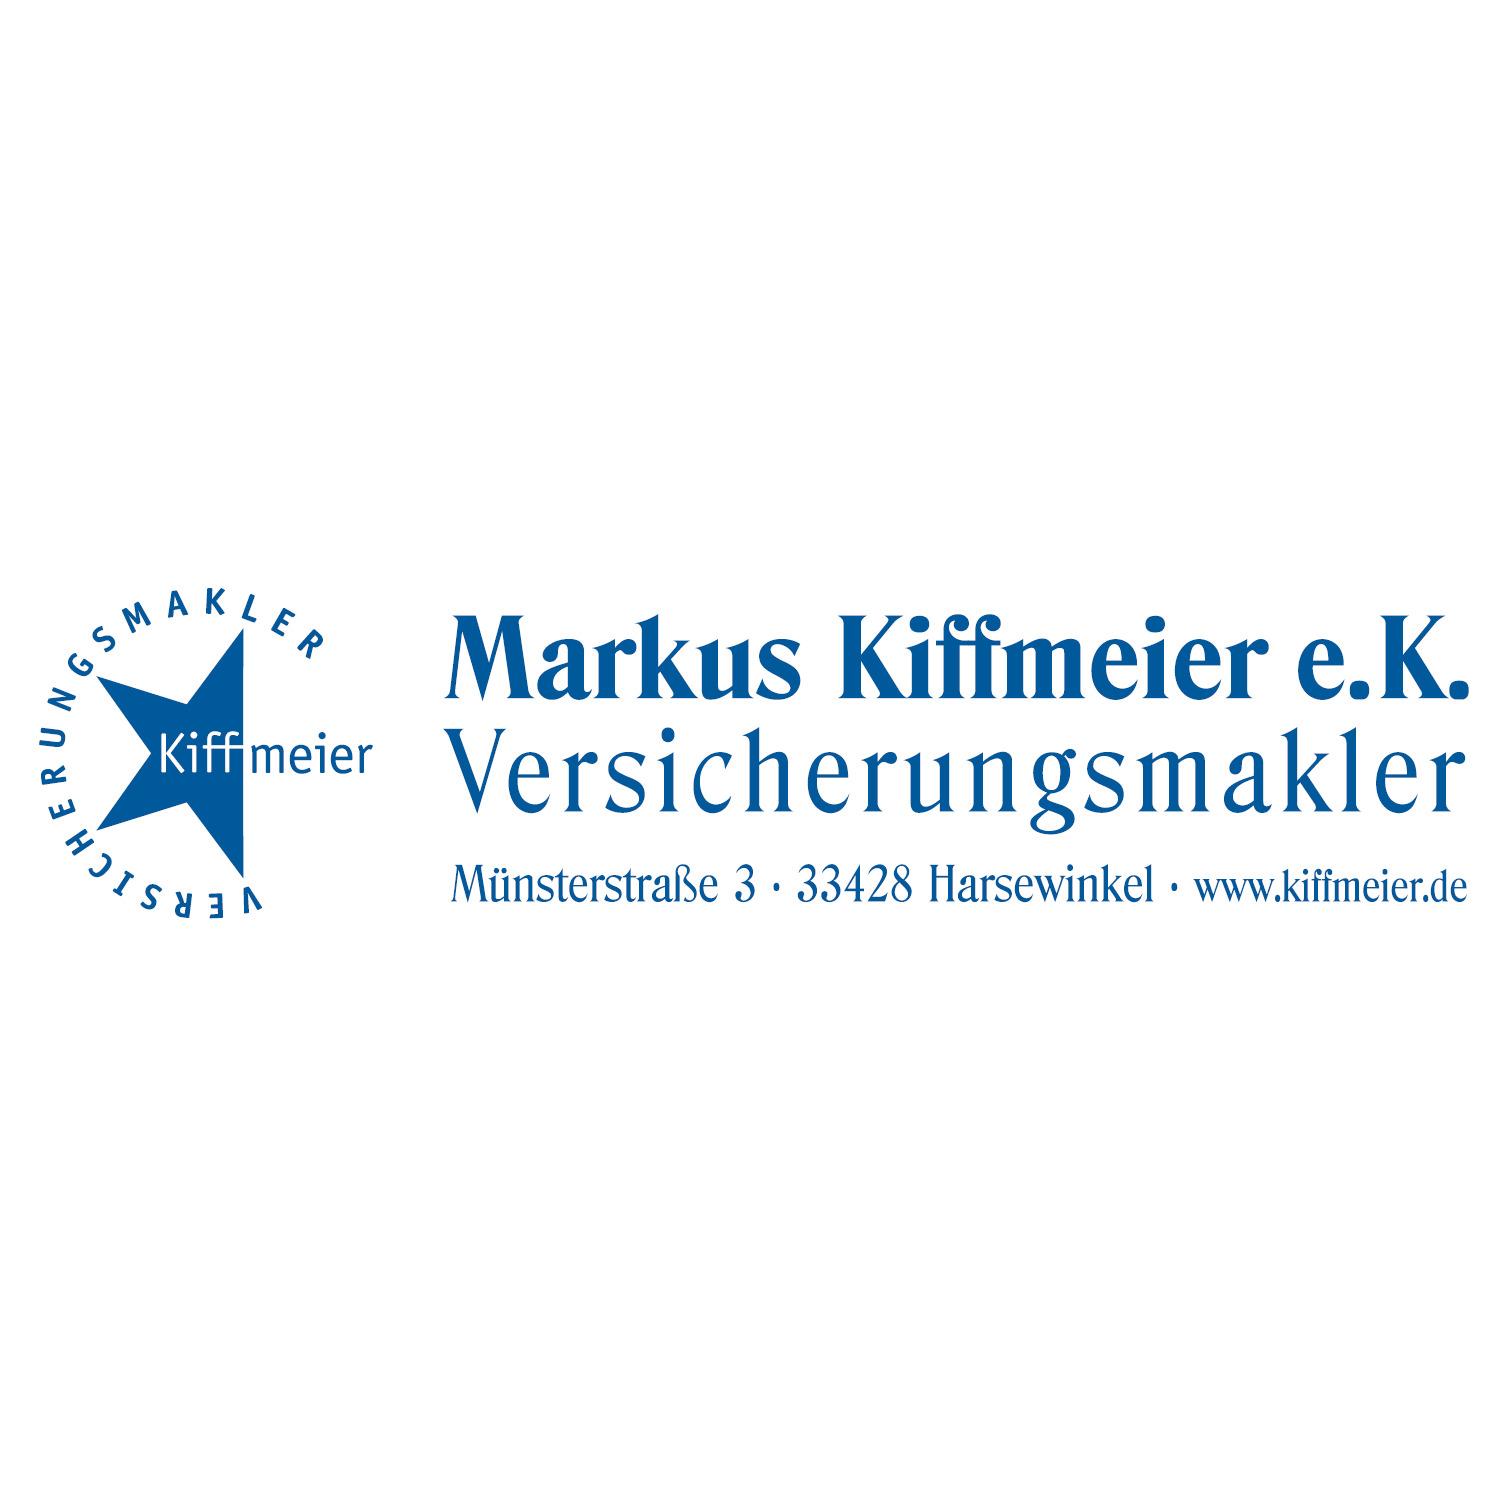 Versicherungsmakler Markus Kiffmeier e.K. Logo